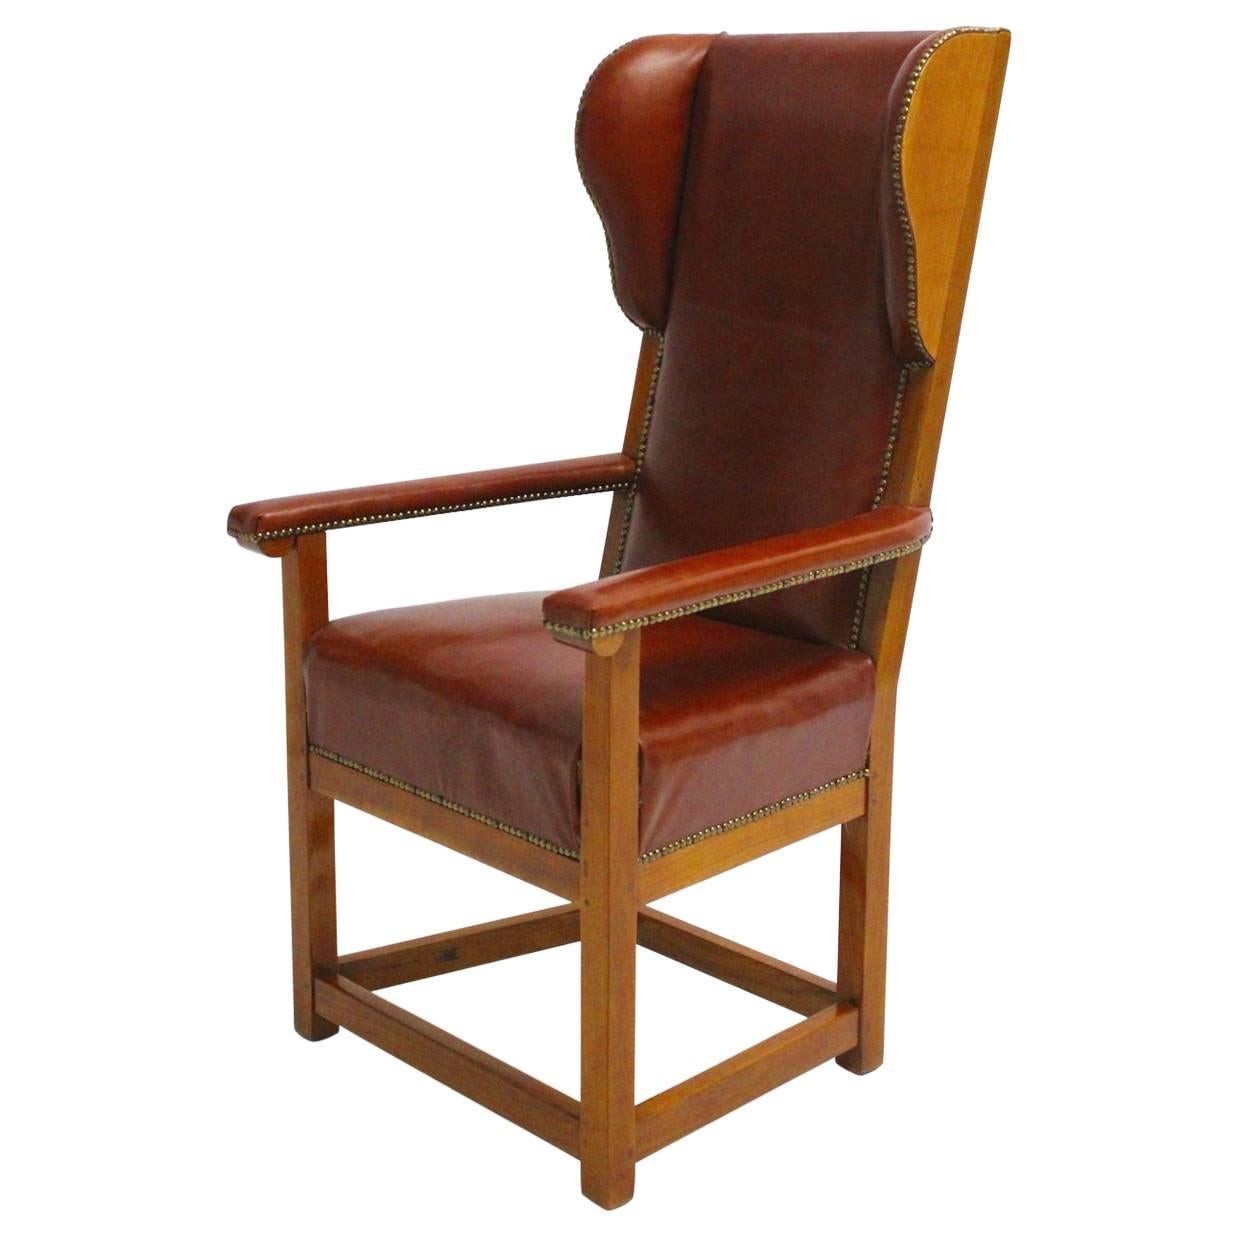 Biedermeier Vintage Cherrywood Wingback Chair, circa 1830 Austria